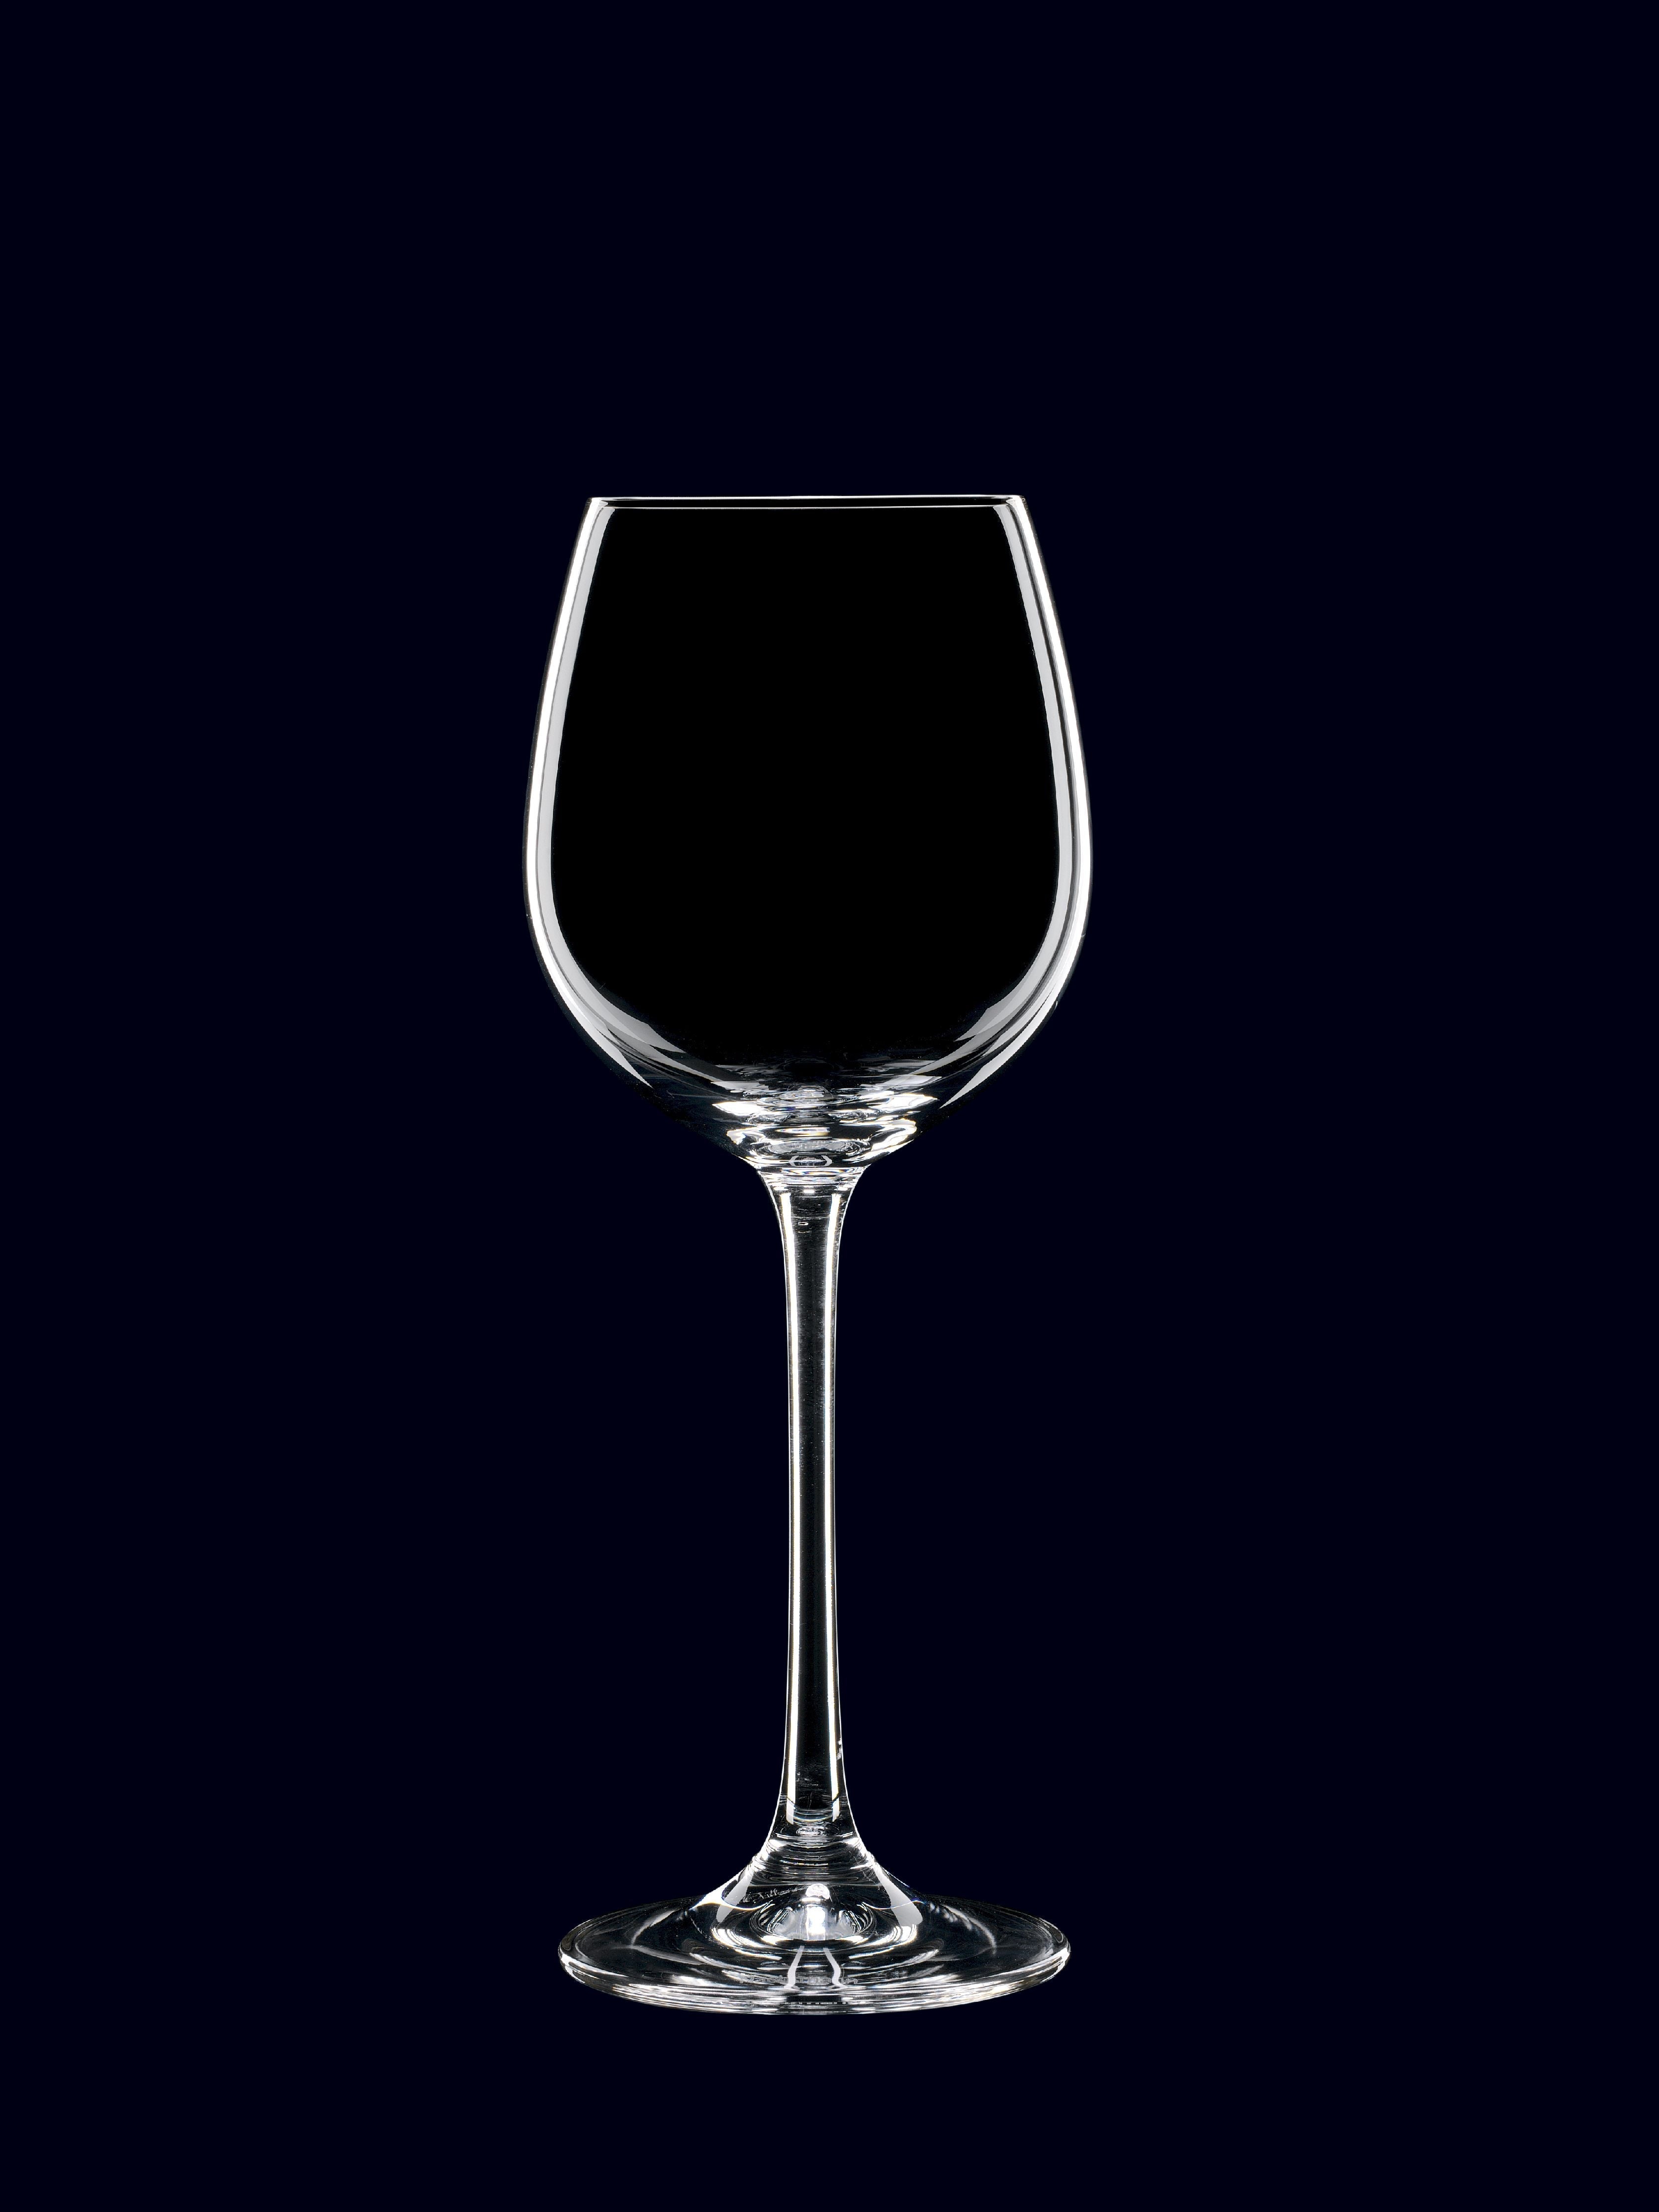 Nachtmann Vivendi premium wit wijnglas 474 ml, set van 4